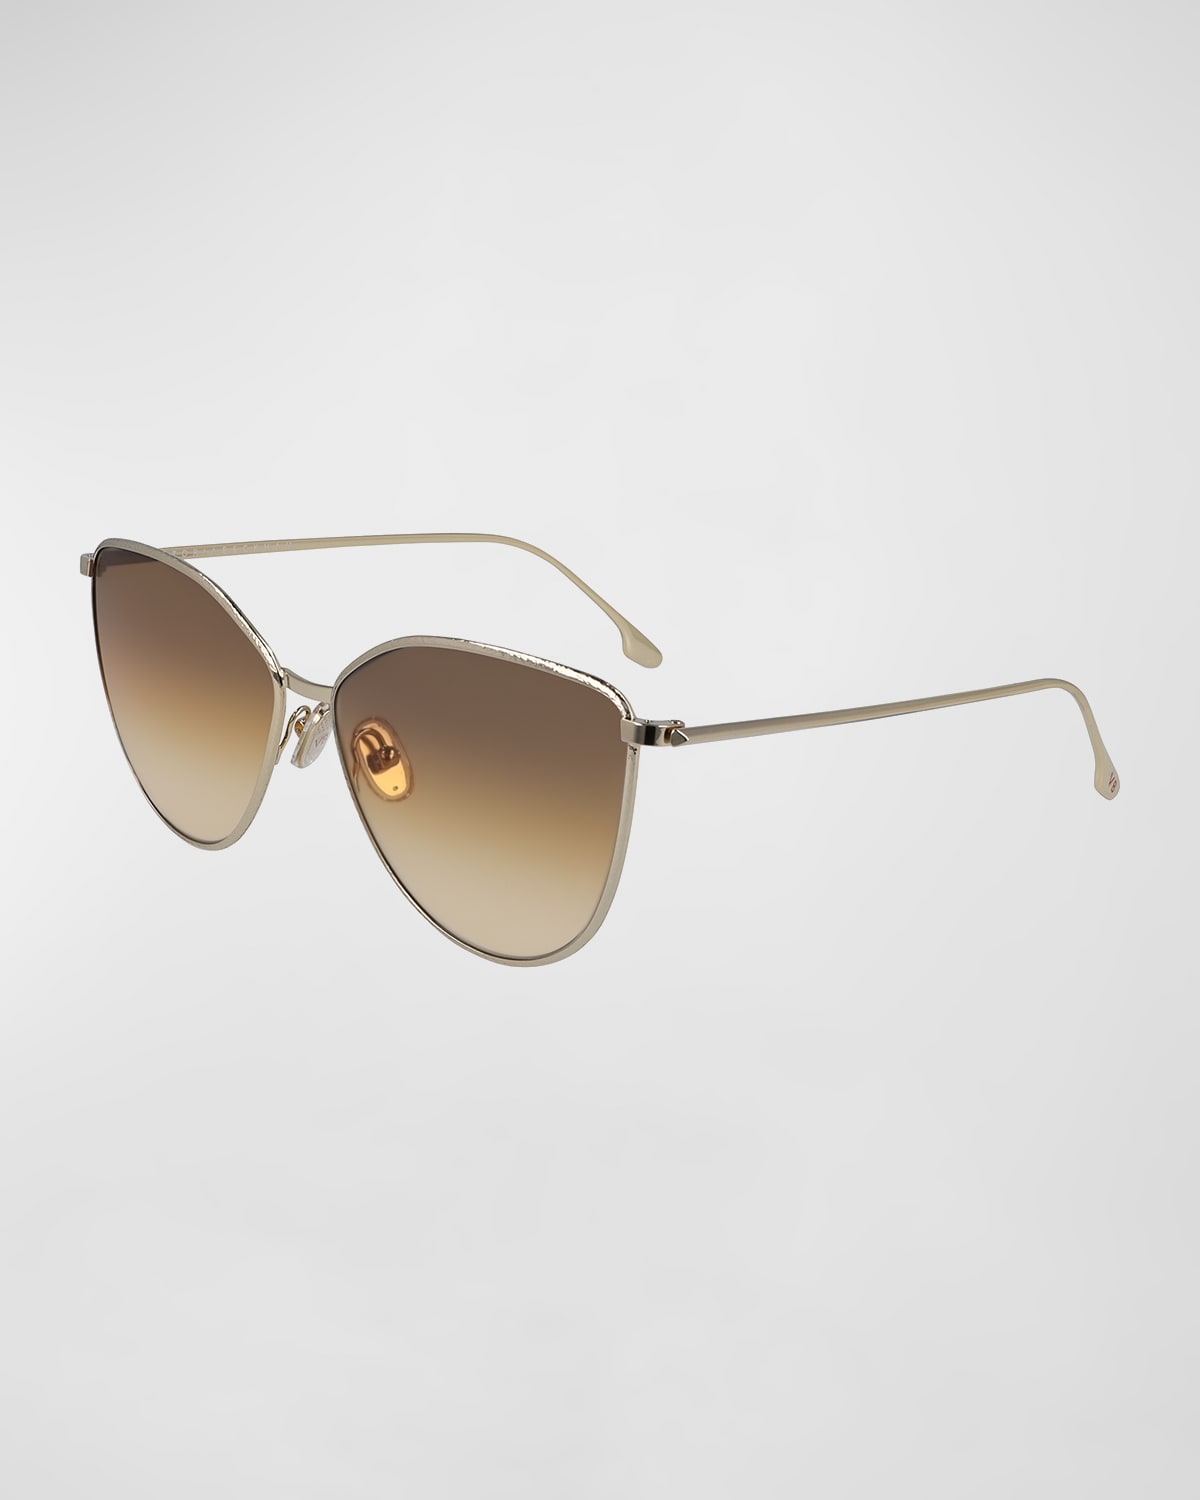 Victoria Beckham Hammered Metal Cat-eye Sunglasses In Gold/brown Orange